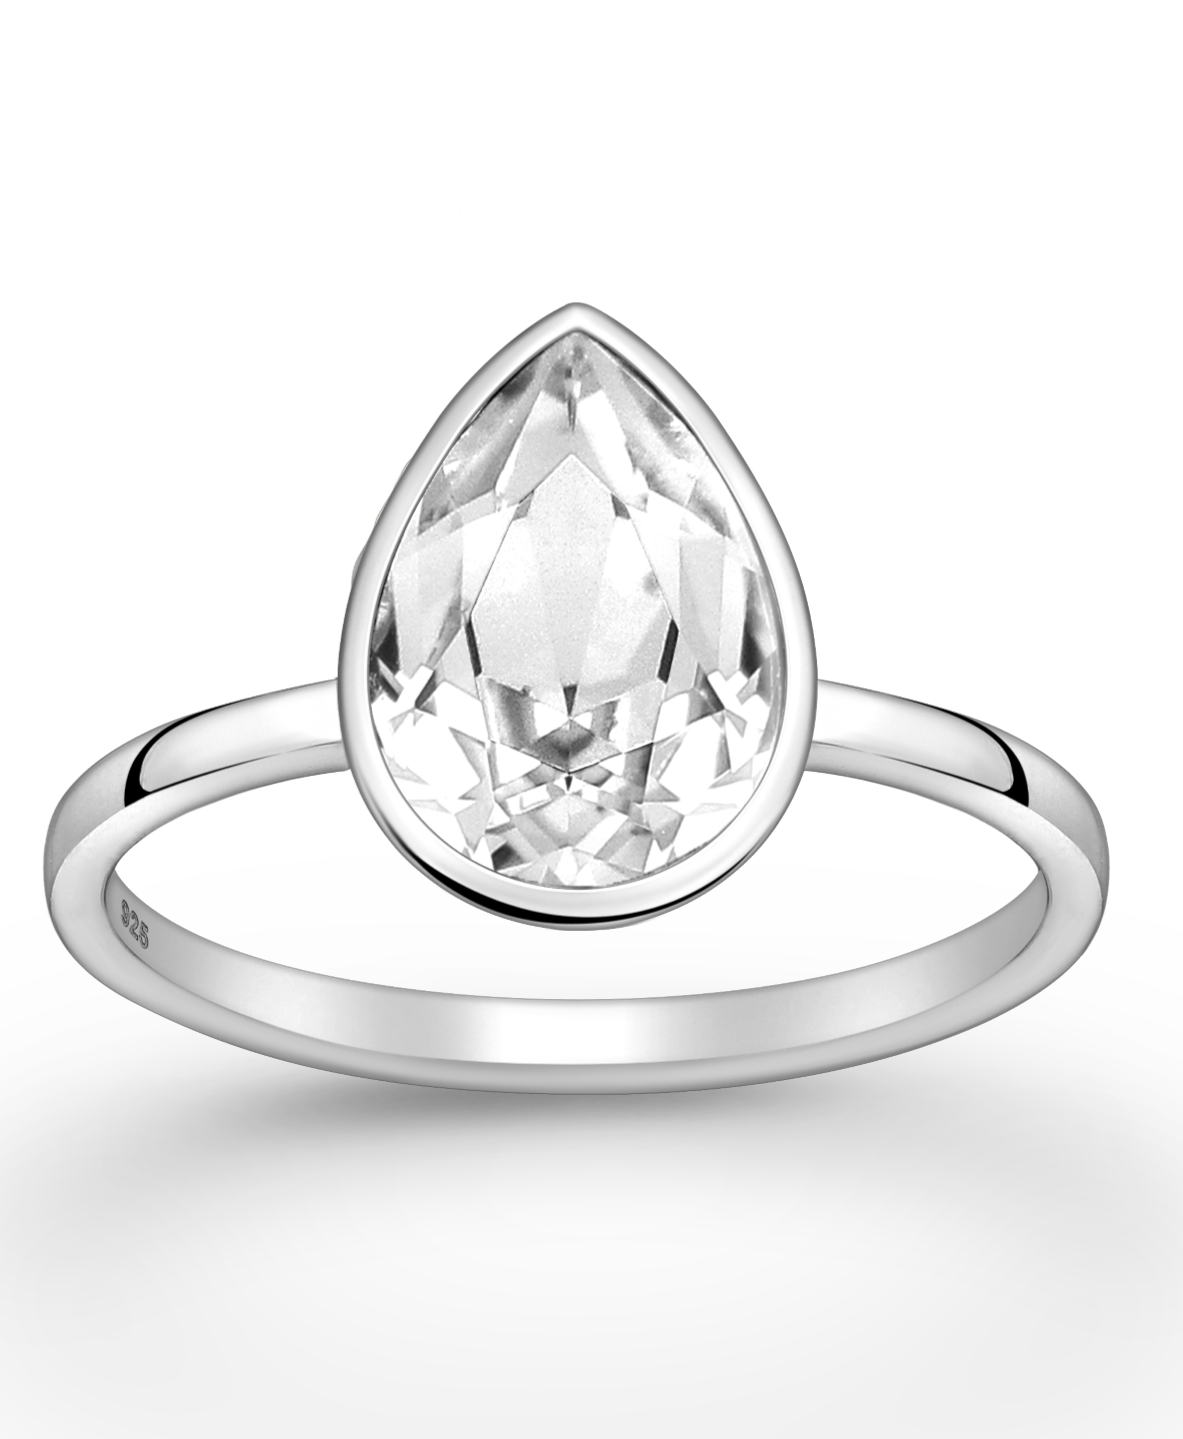 Swarovski Crystal Sterling Silver Ring